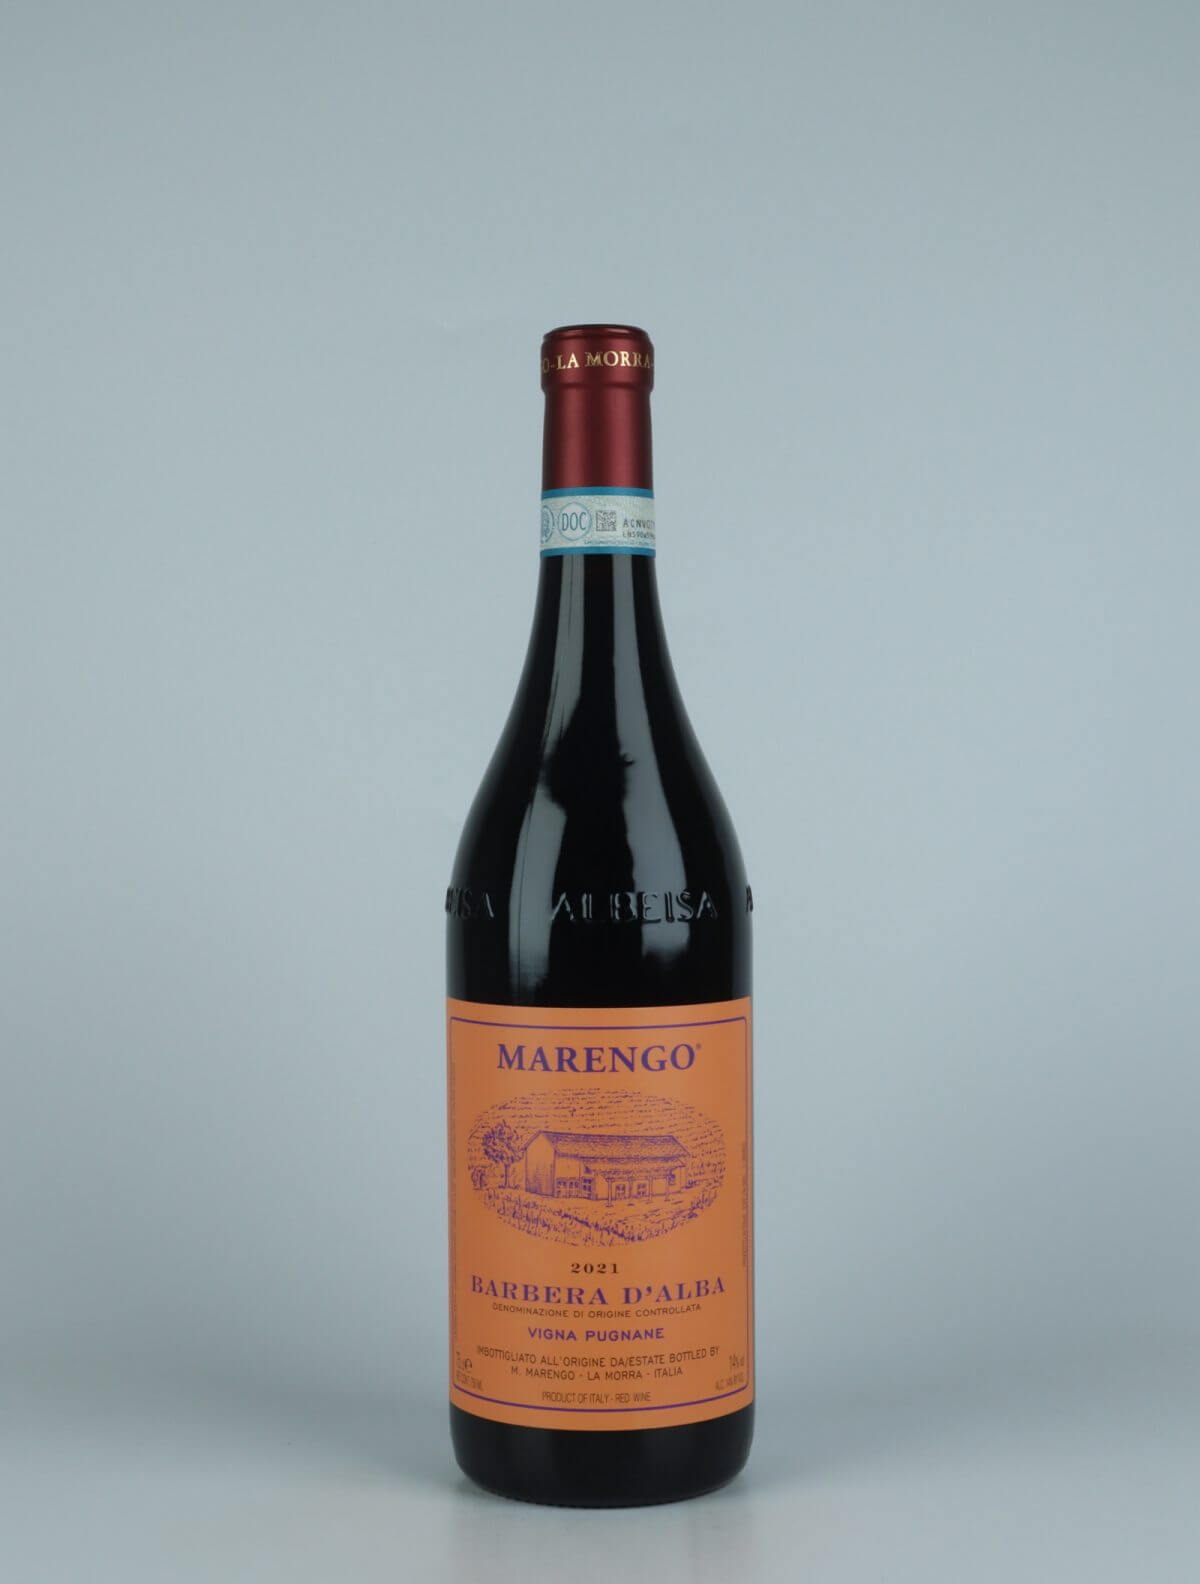 A bottle  Barbera d'Alba - Pugnane Red wine from Mario Marengo, Piedmont in Italy